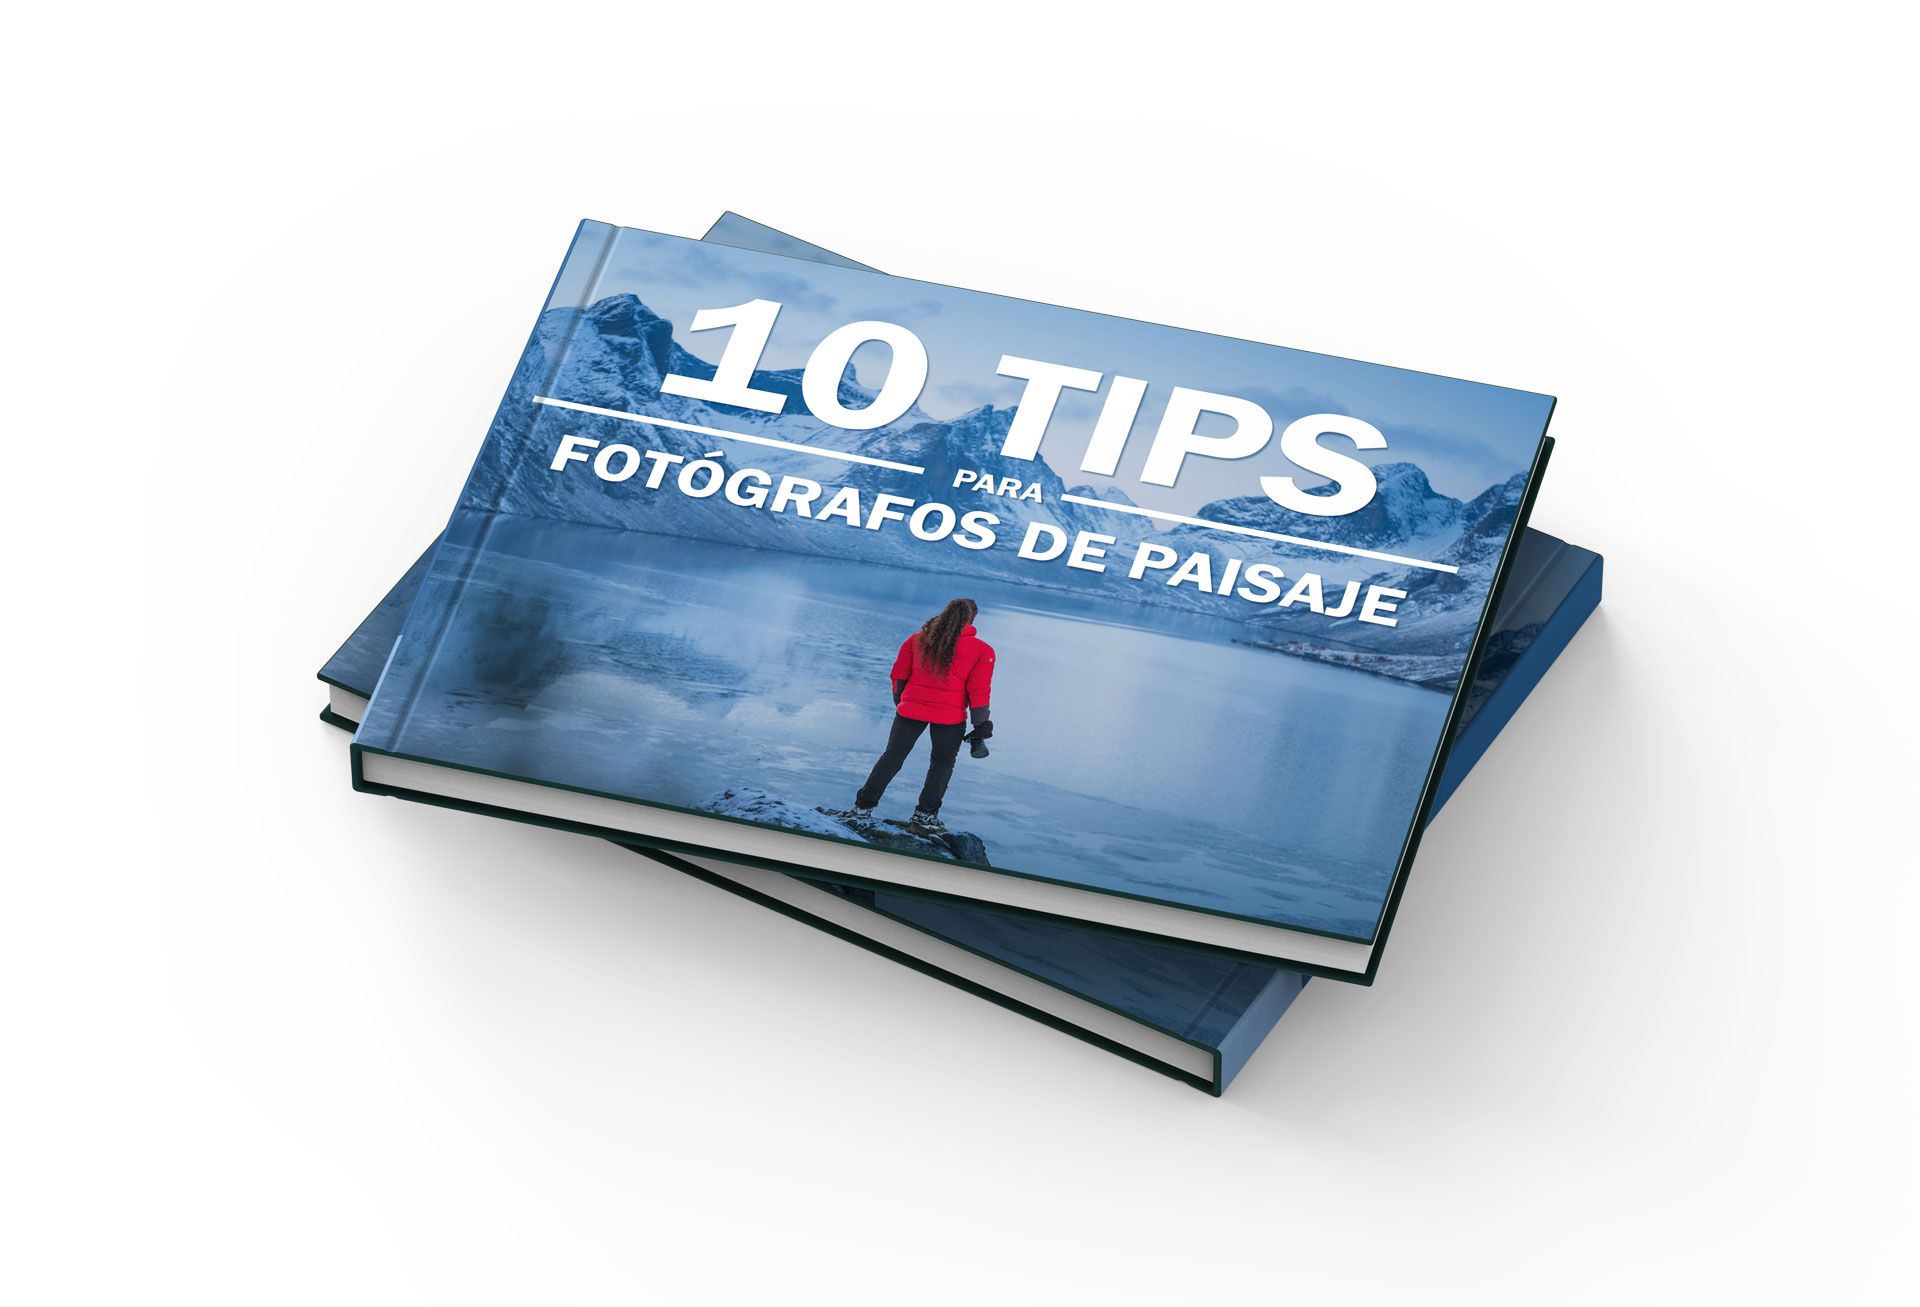 Ebooks para mejorar tu fotografía de paisaje - 10 tips para fotógrafos de paisaje. By David de la Iglesia (@DIVCreativo)